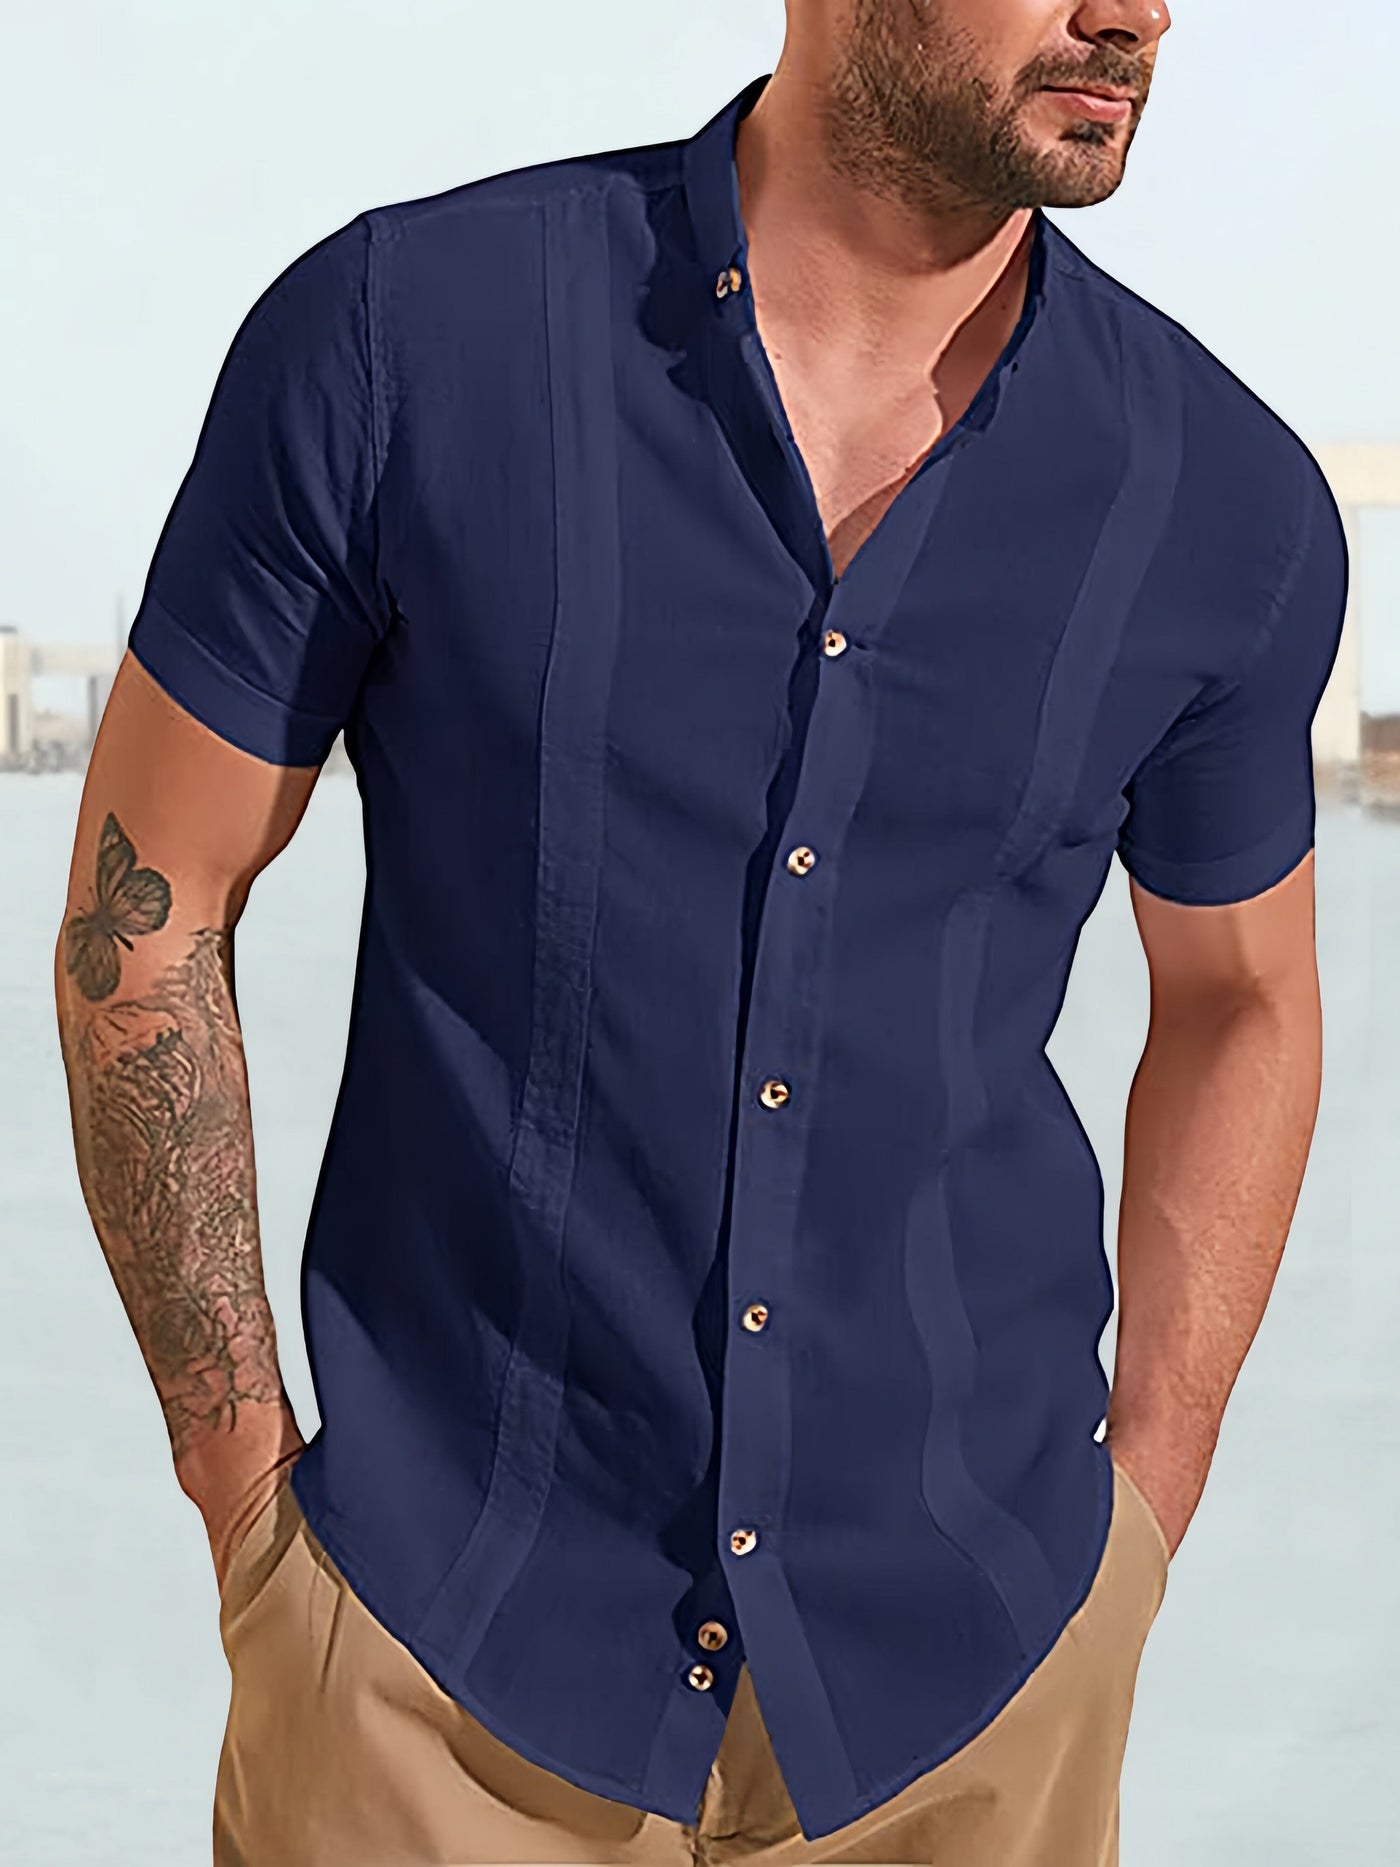 Soft Cotton Linen Loose Fit Button Shirt Shirts coofandystore Deep Blue M 